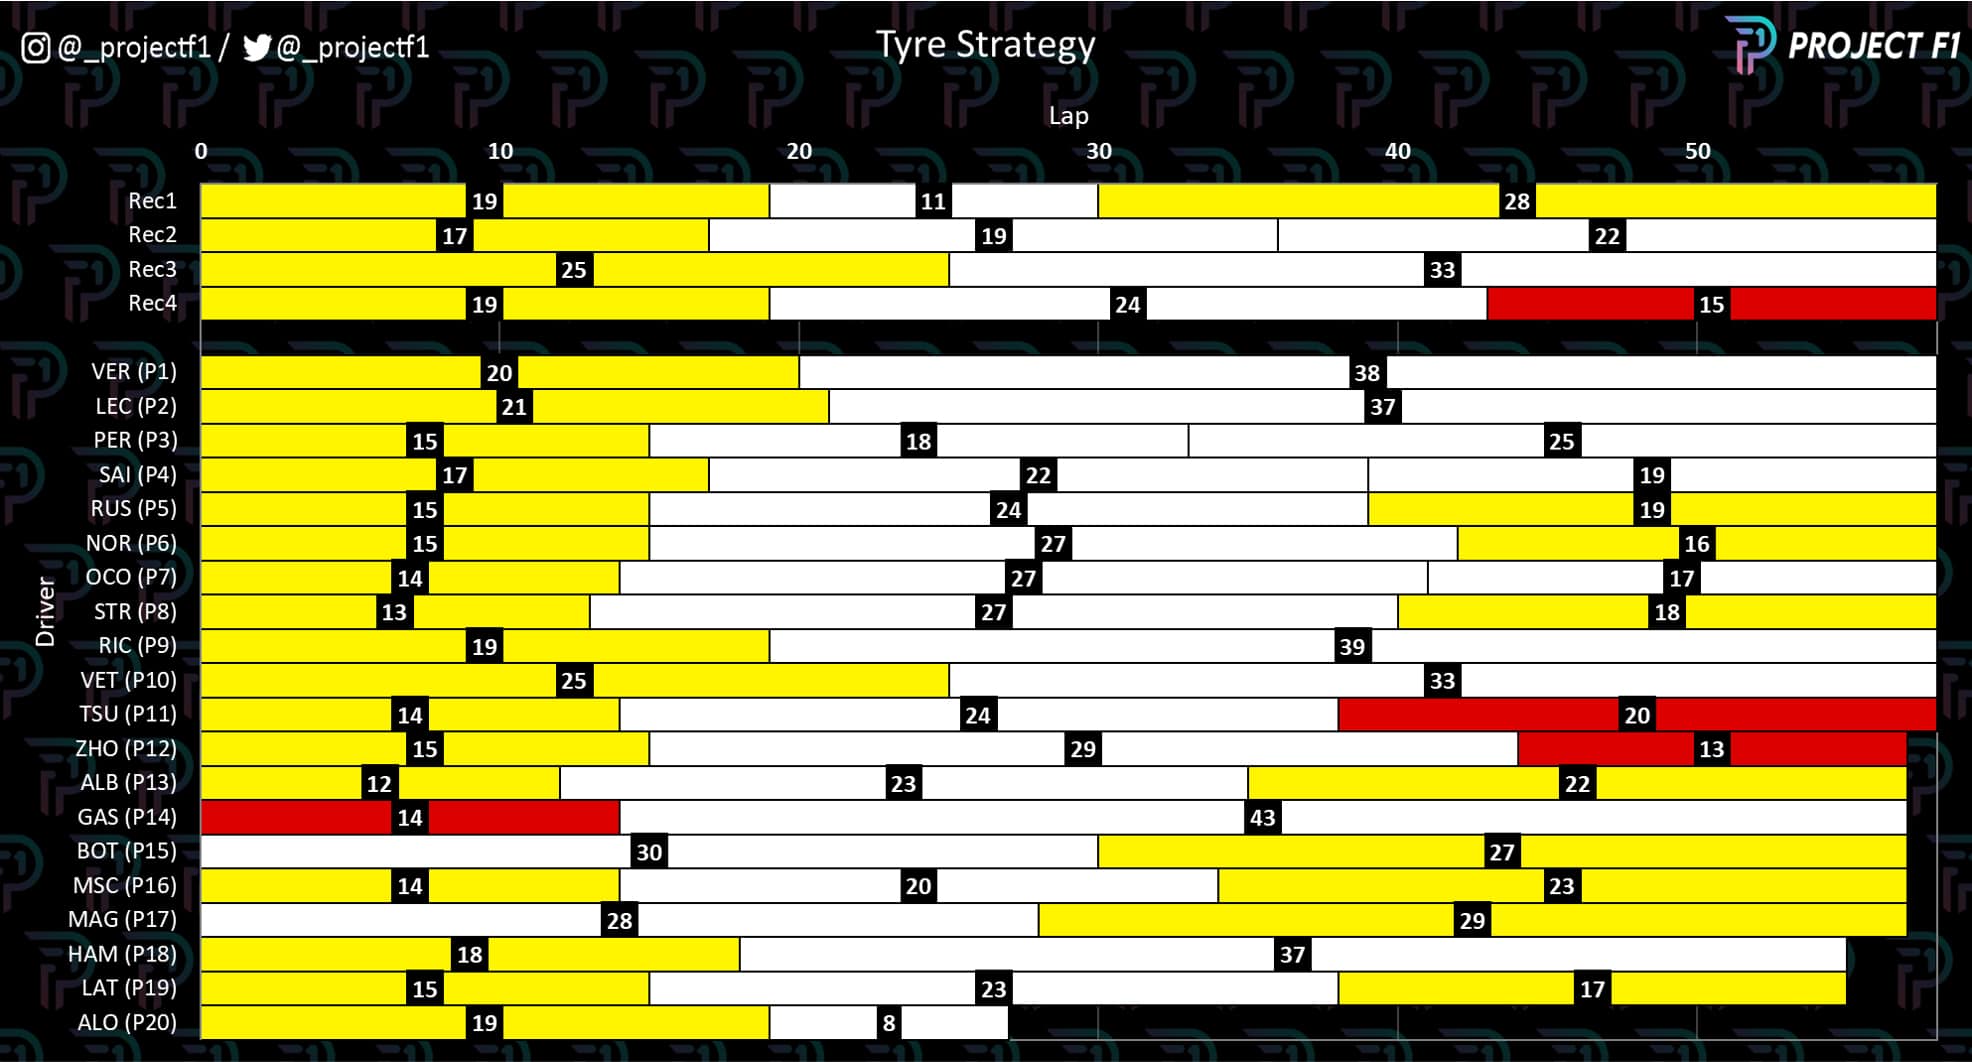 22 Abu Dhabi GP tyre strategy